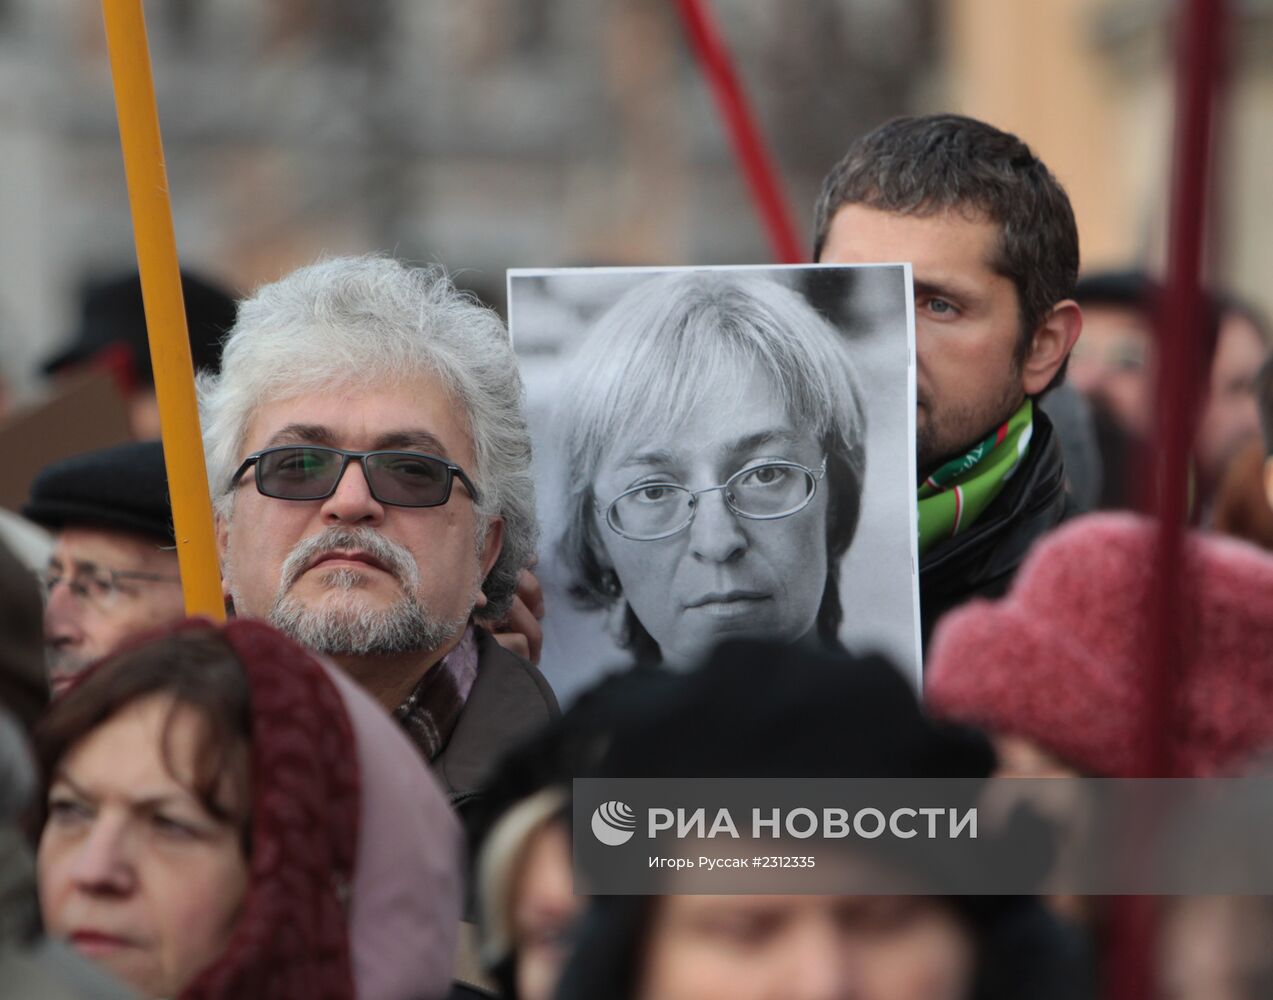 "Марш против ненависти" в Санкт-Петербурге